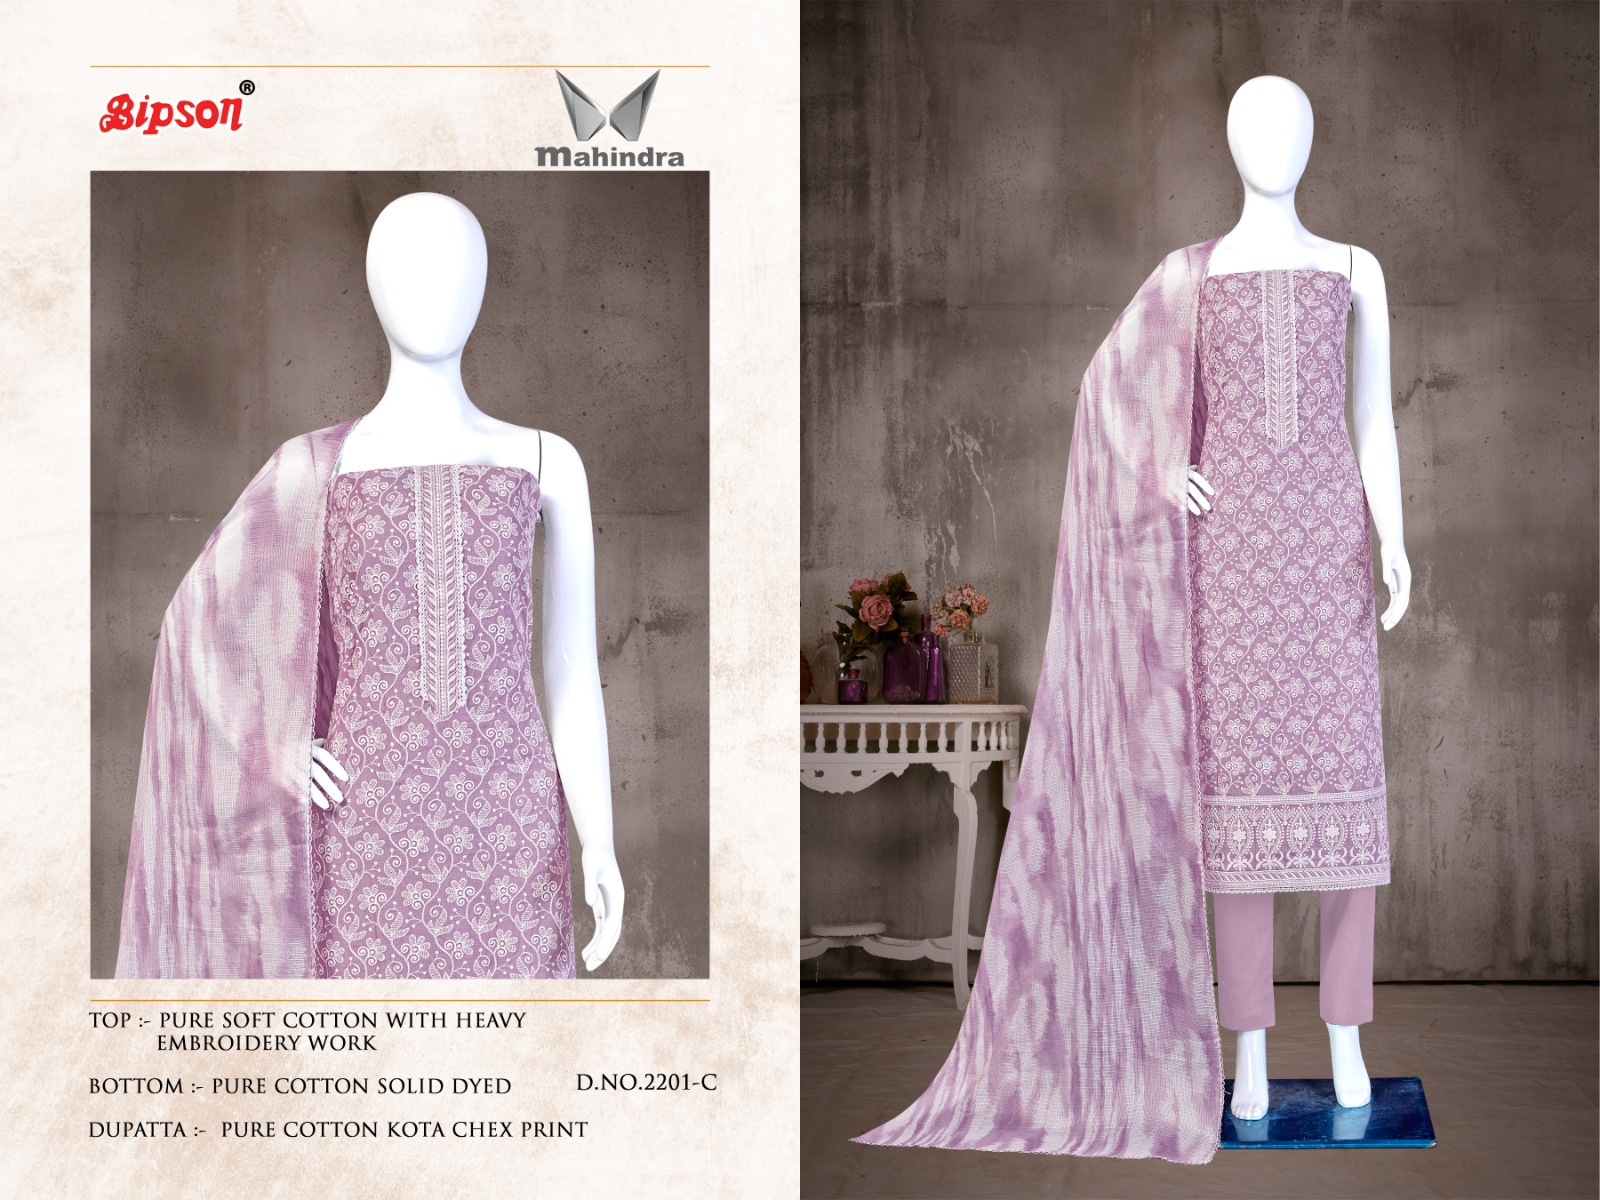 Bipson prints mahindra 2201 cotton regal look salwar suit catalog